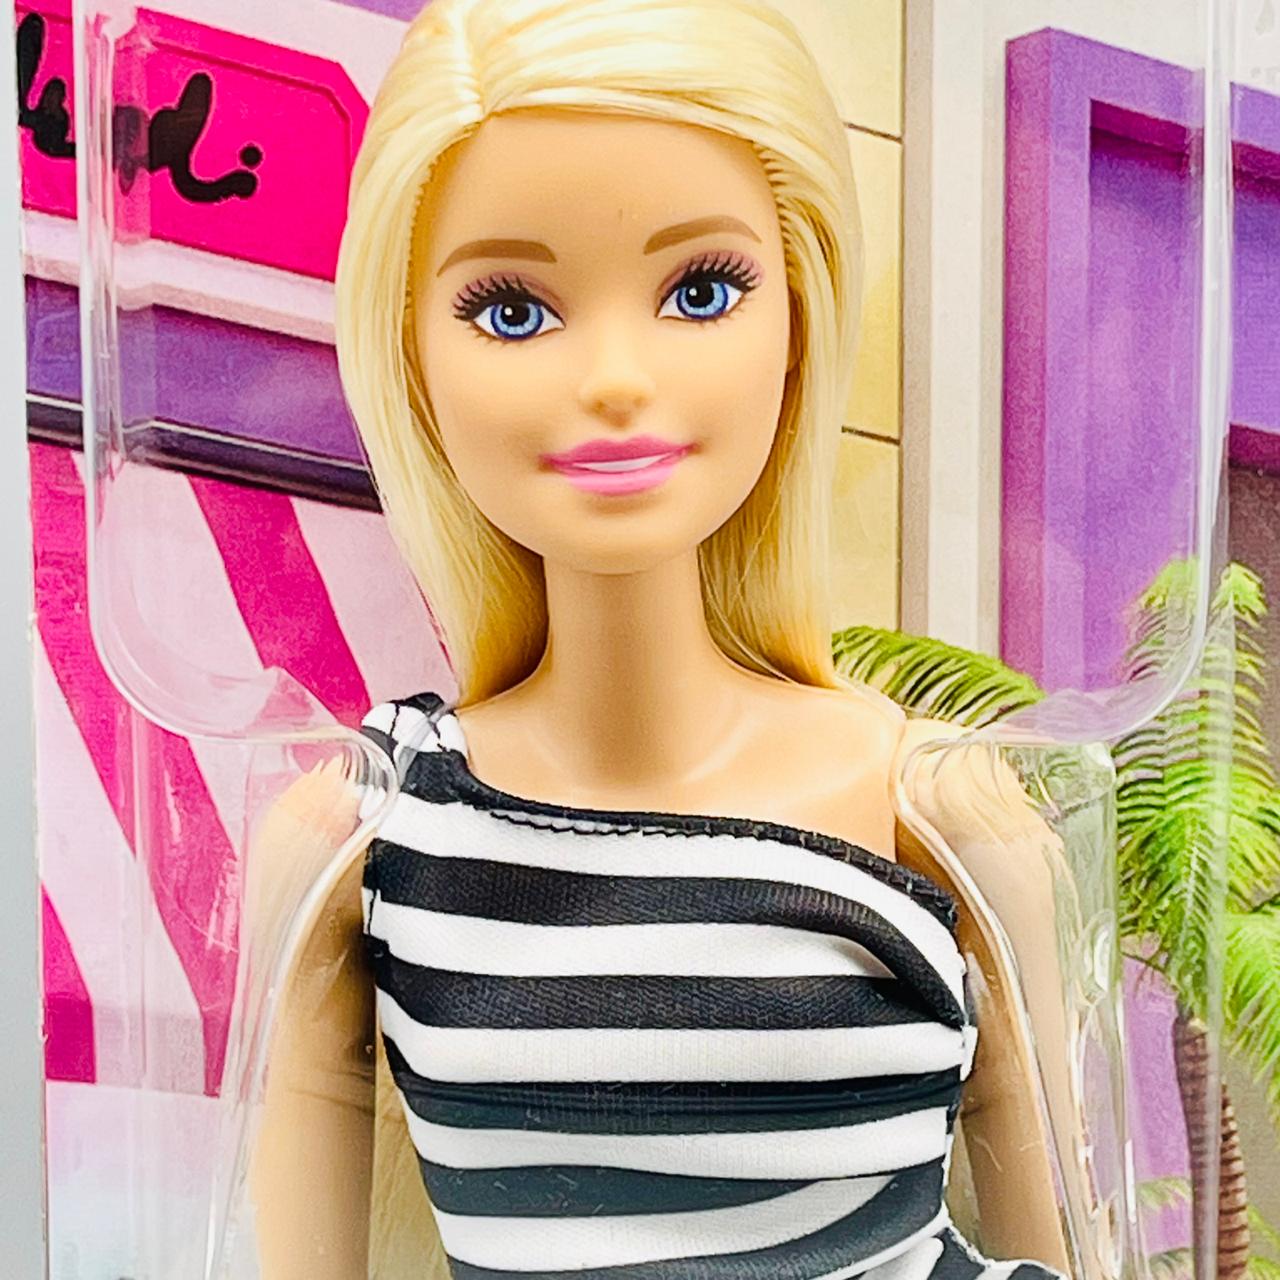 MATTEL Barbie Doll with Black & White Dress